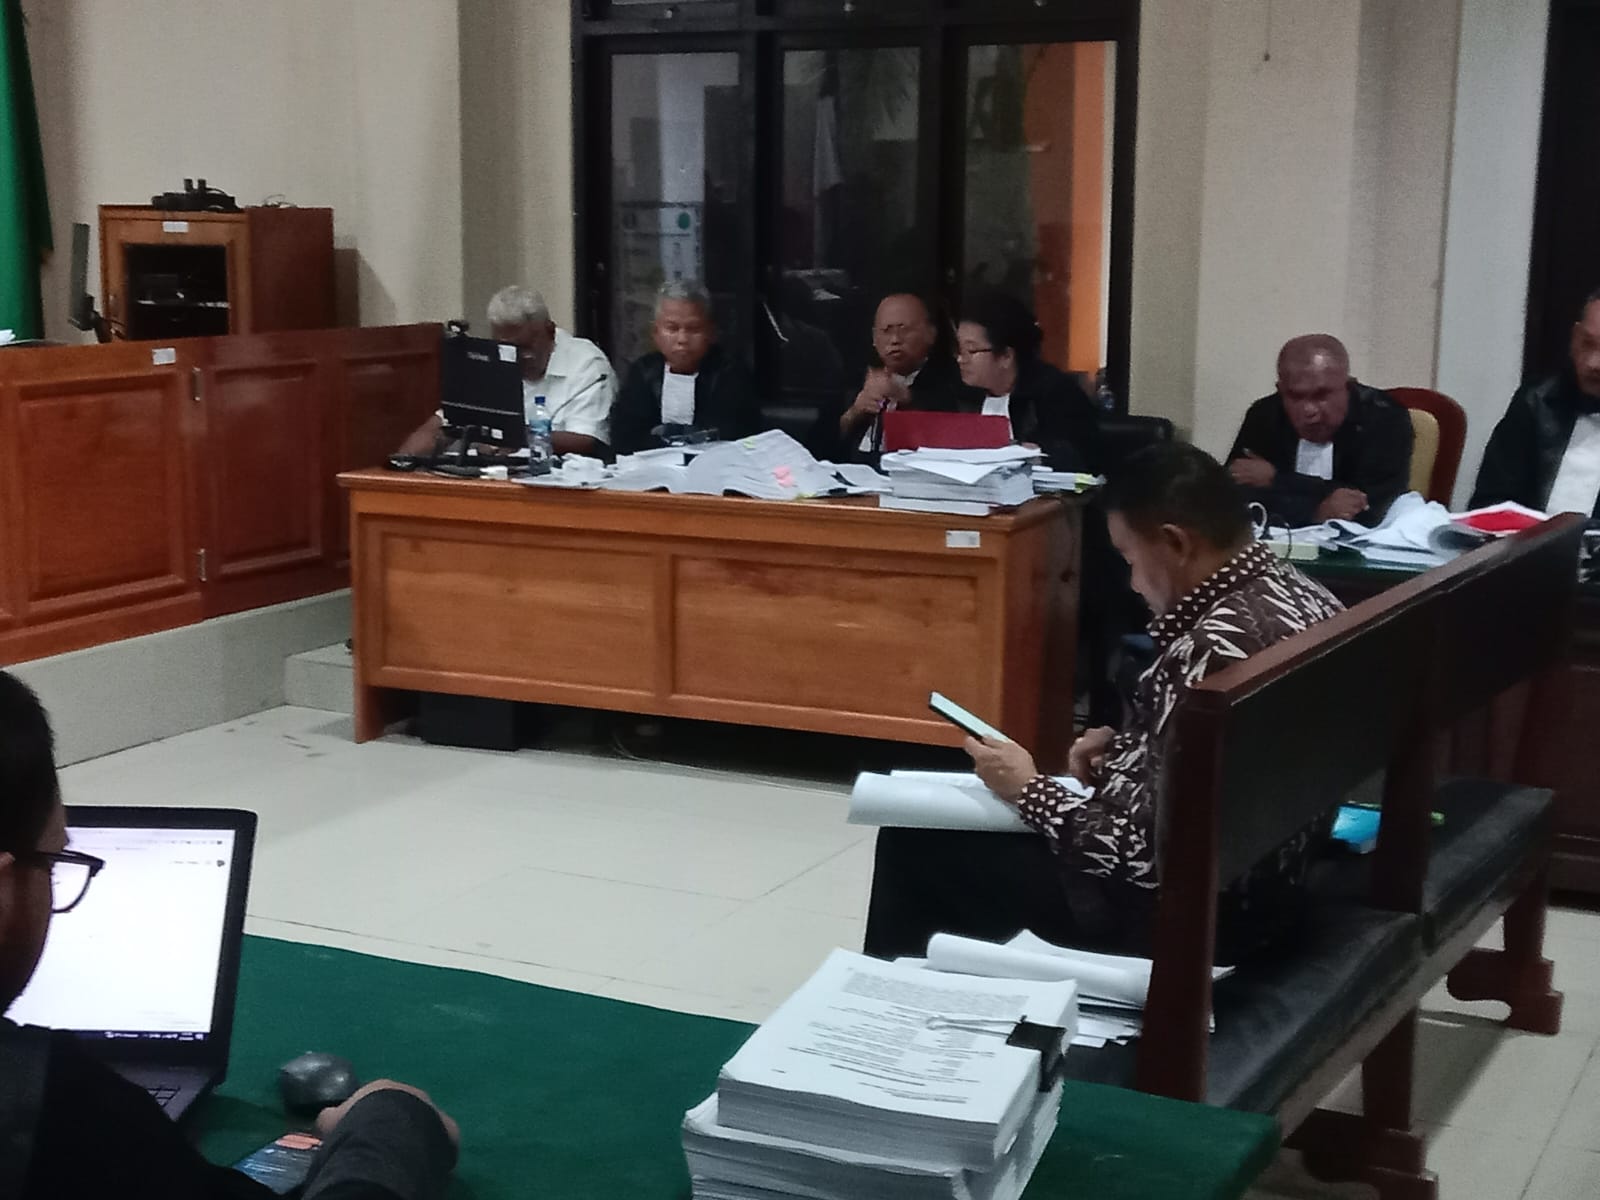 Saksi Ahli KAP Tarmizi Tahir, Herold Makawimbang, Tak Terdaftar di IAPI dan Berani Tuding Dokumen Ilegal di Persidangan